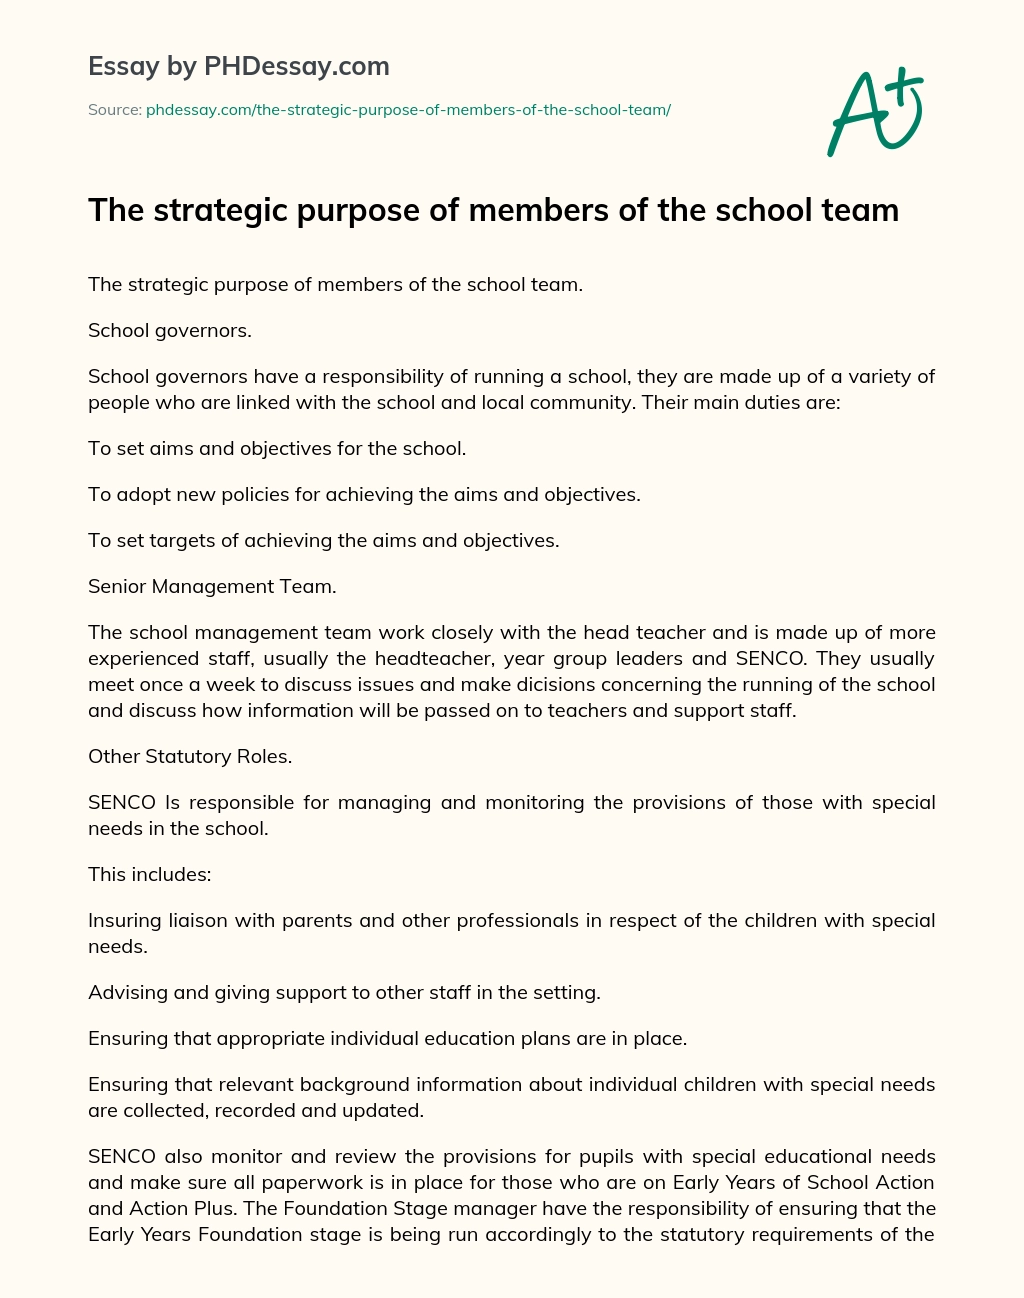 The Strategic Purpose of Members of the School Team essay